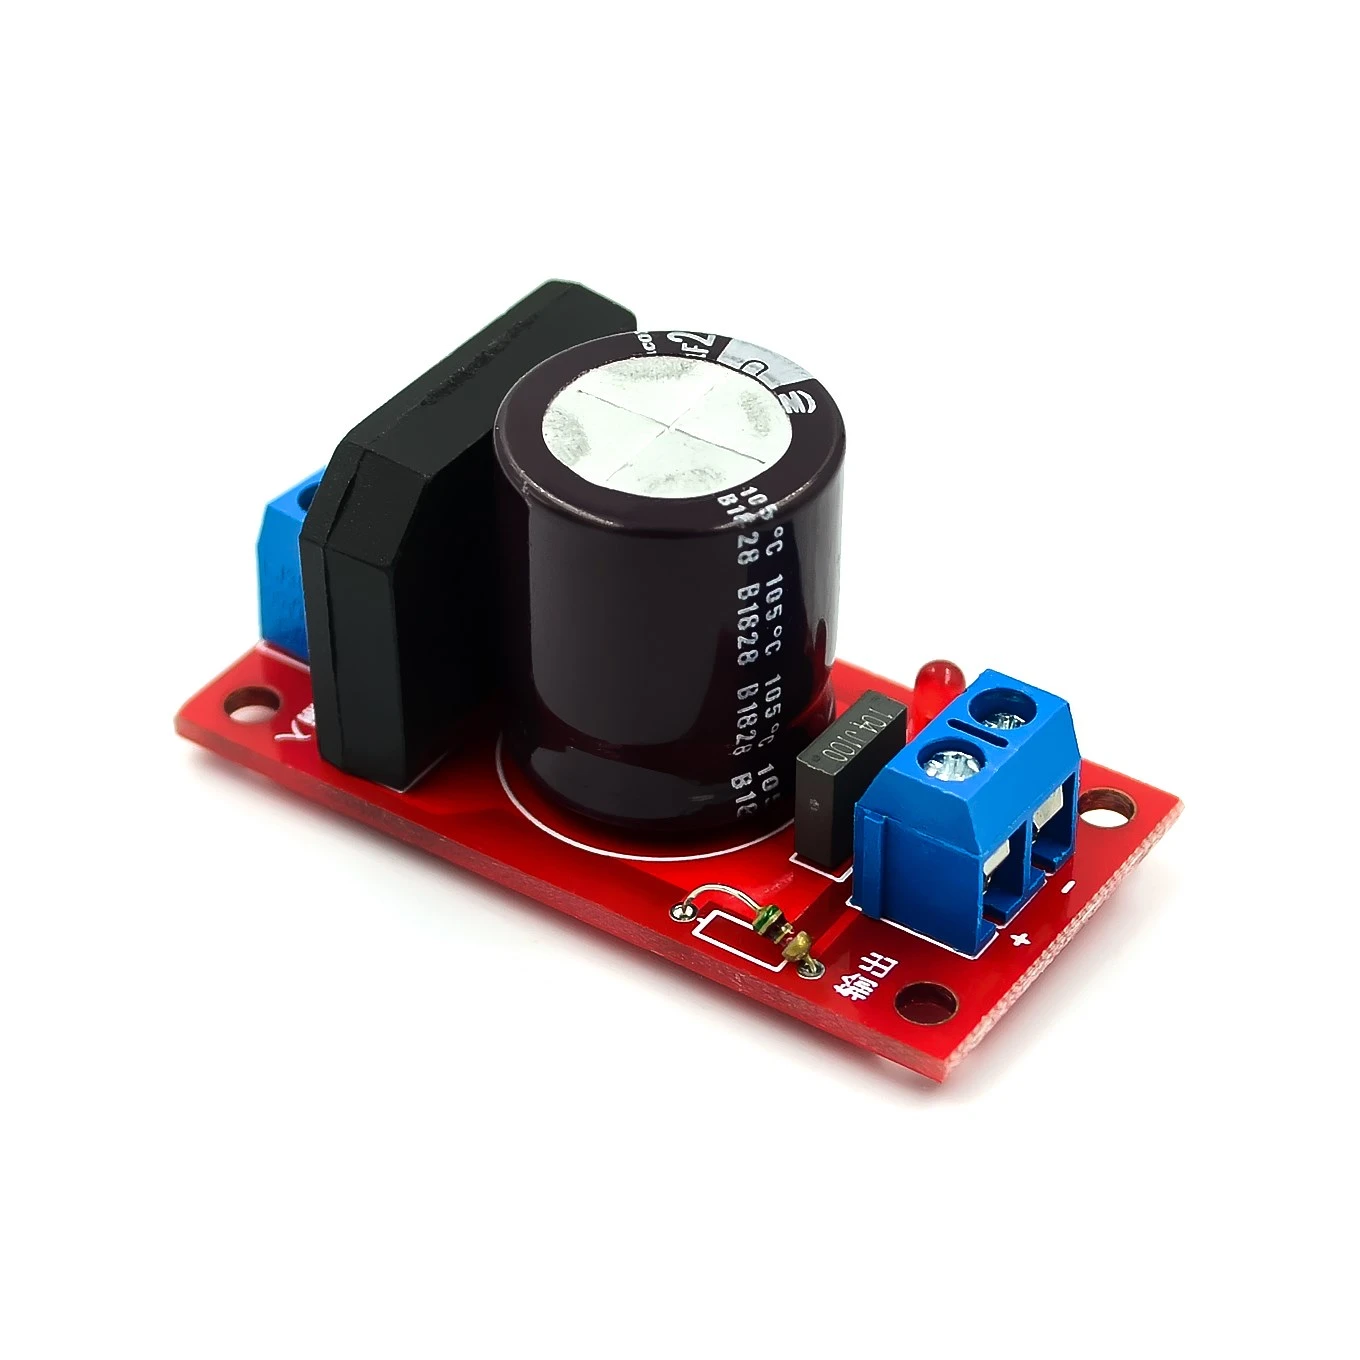 Rectifier filter power supply board / 8A rectifier power amplifier / 8A rectifier with red LED indicator / AC single power suppl